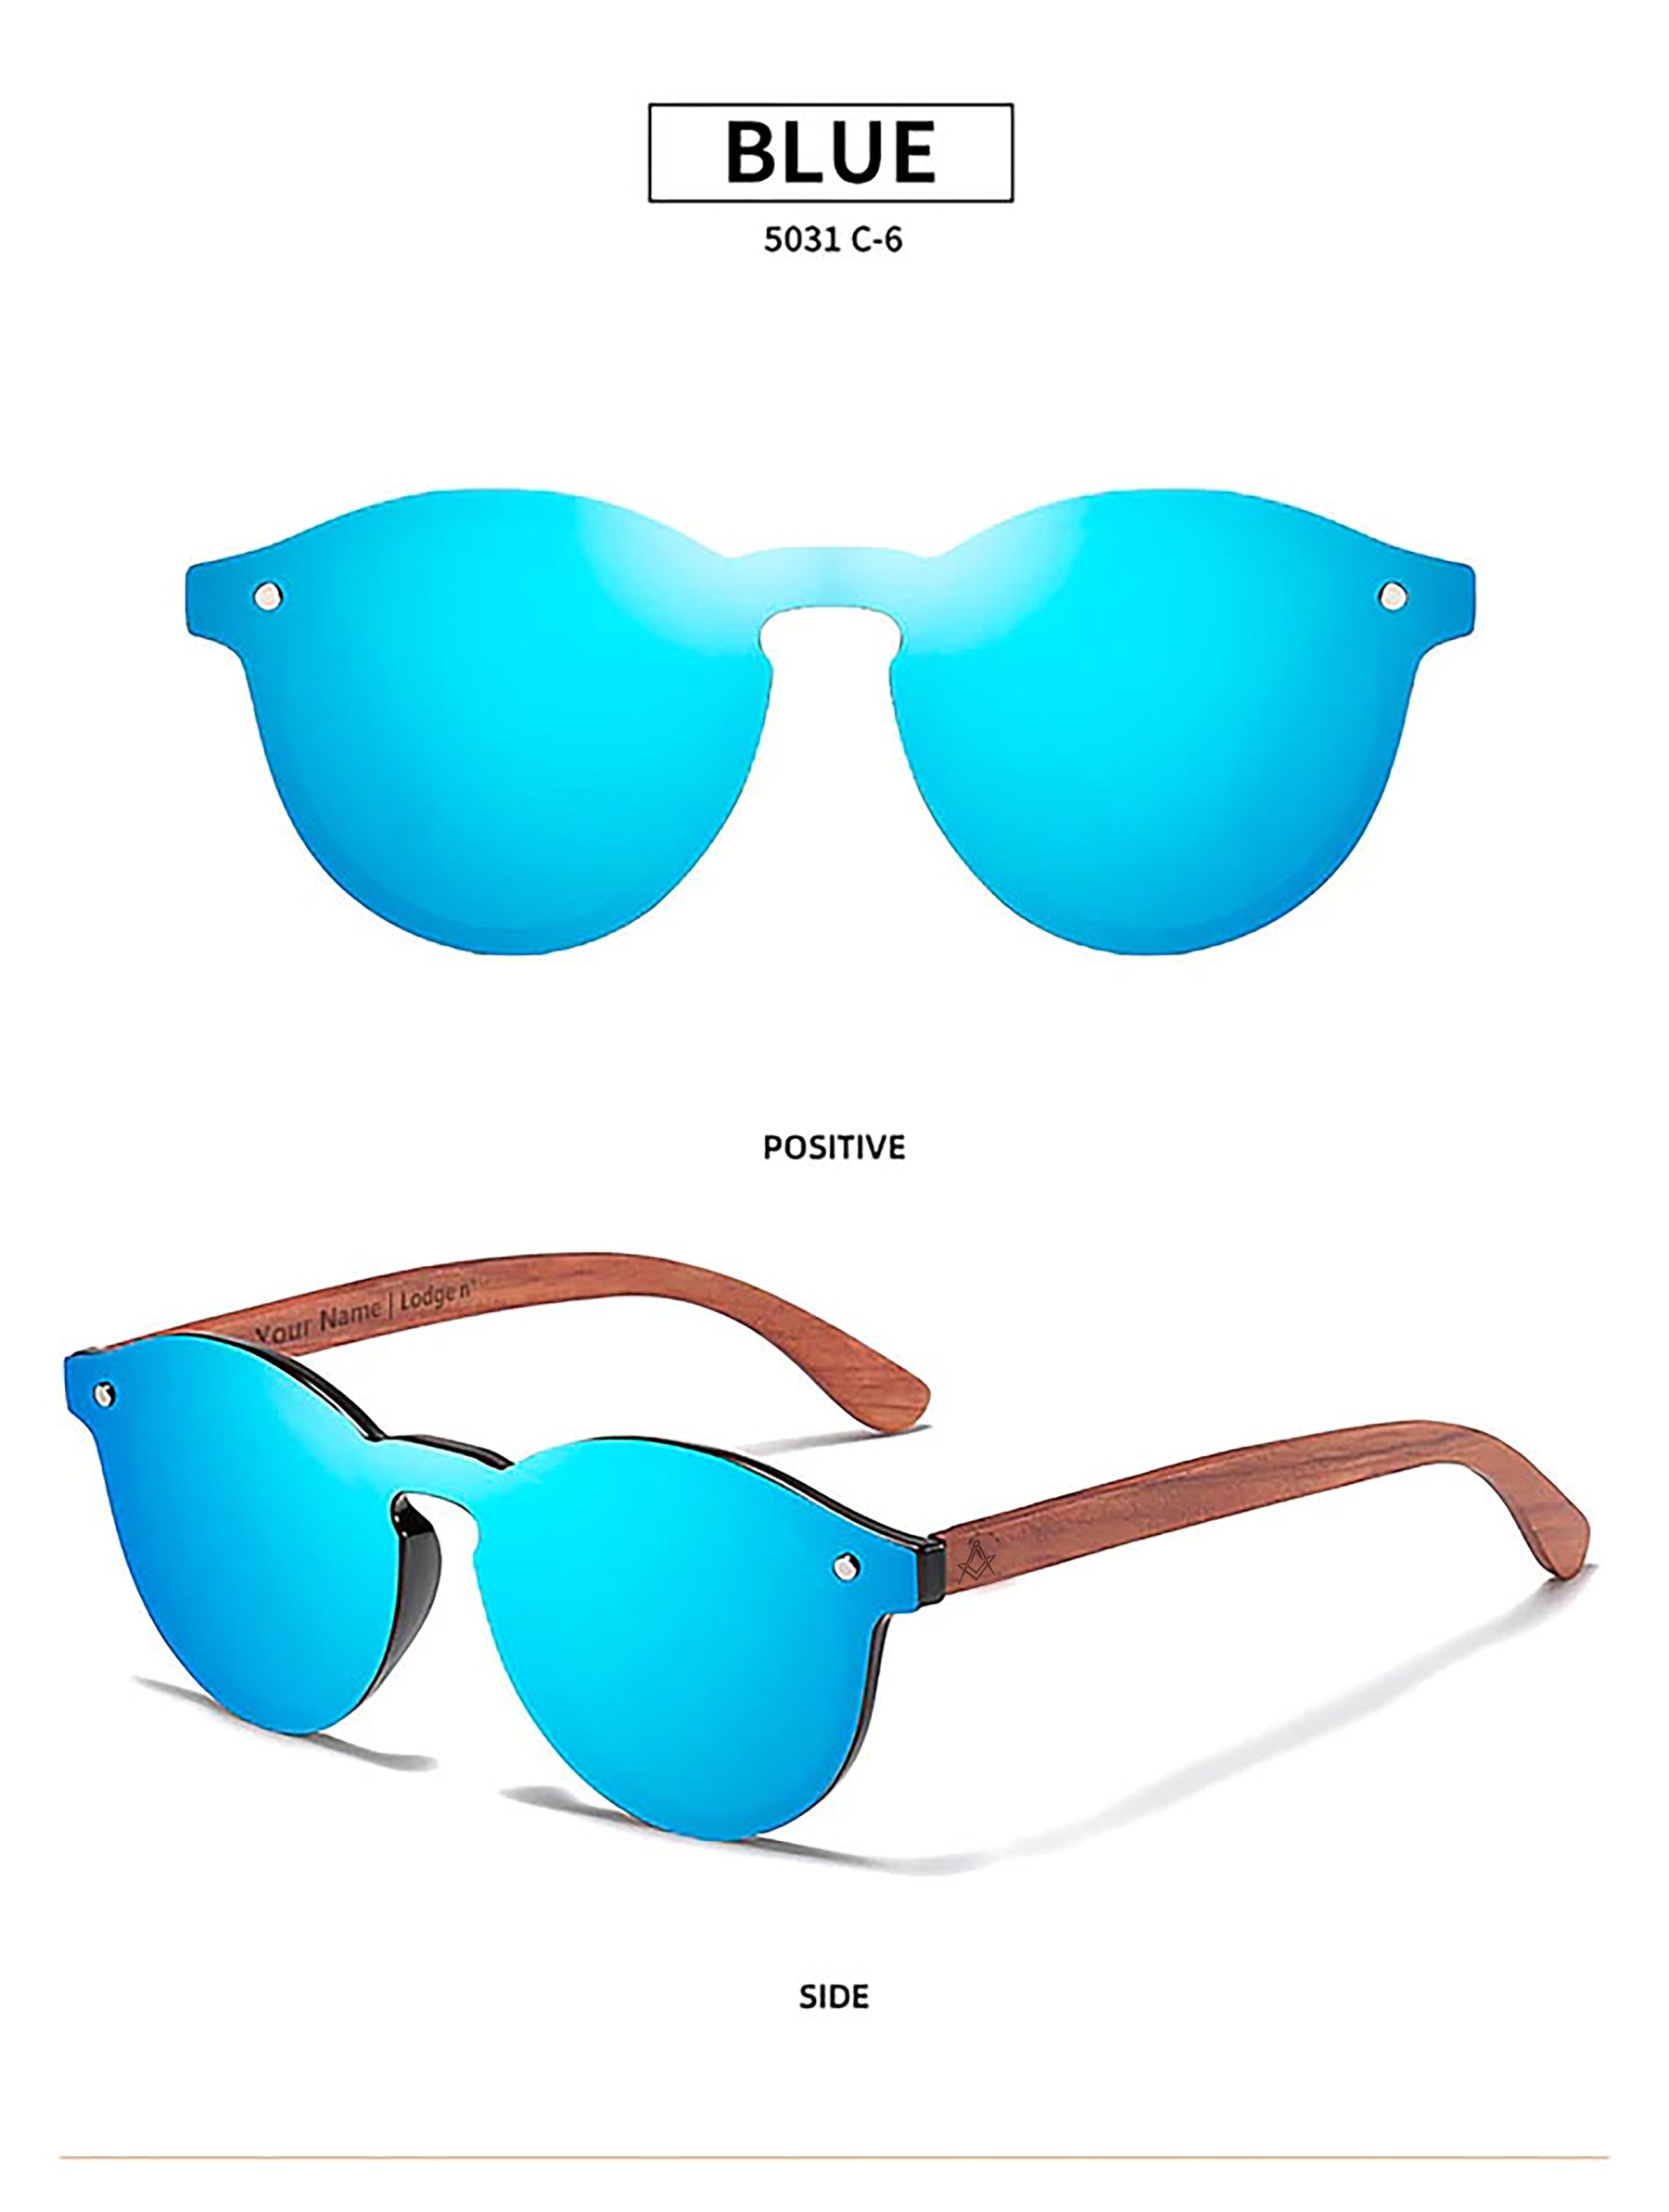 Master Mason Blue Lodge Sunglasses - Leather Case Included